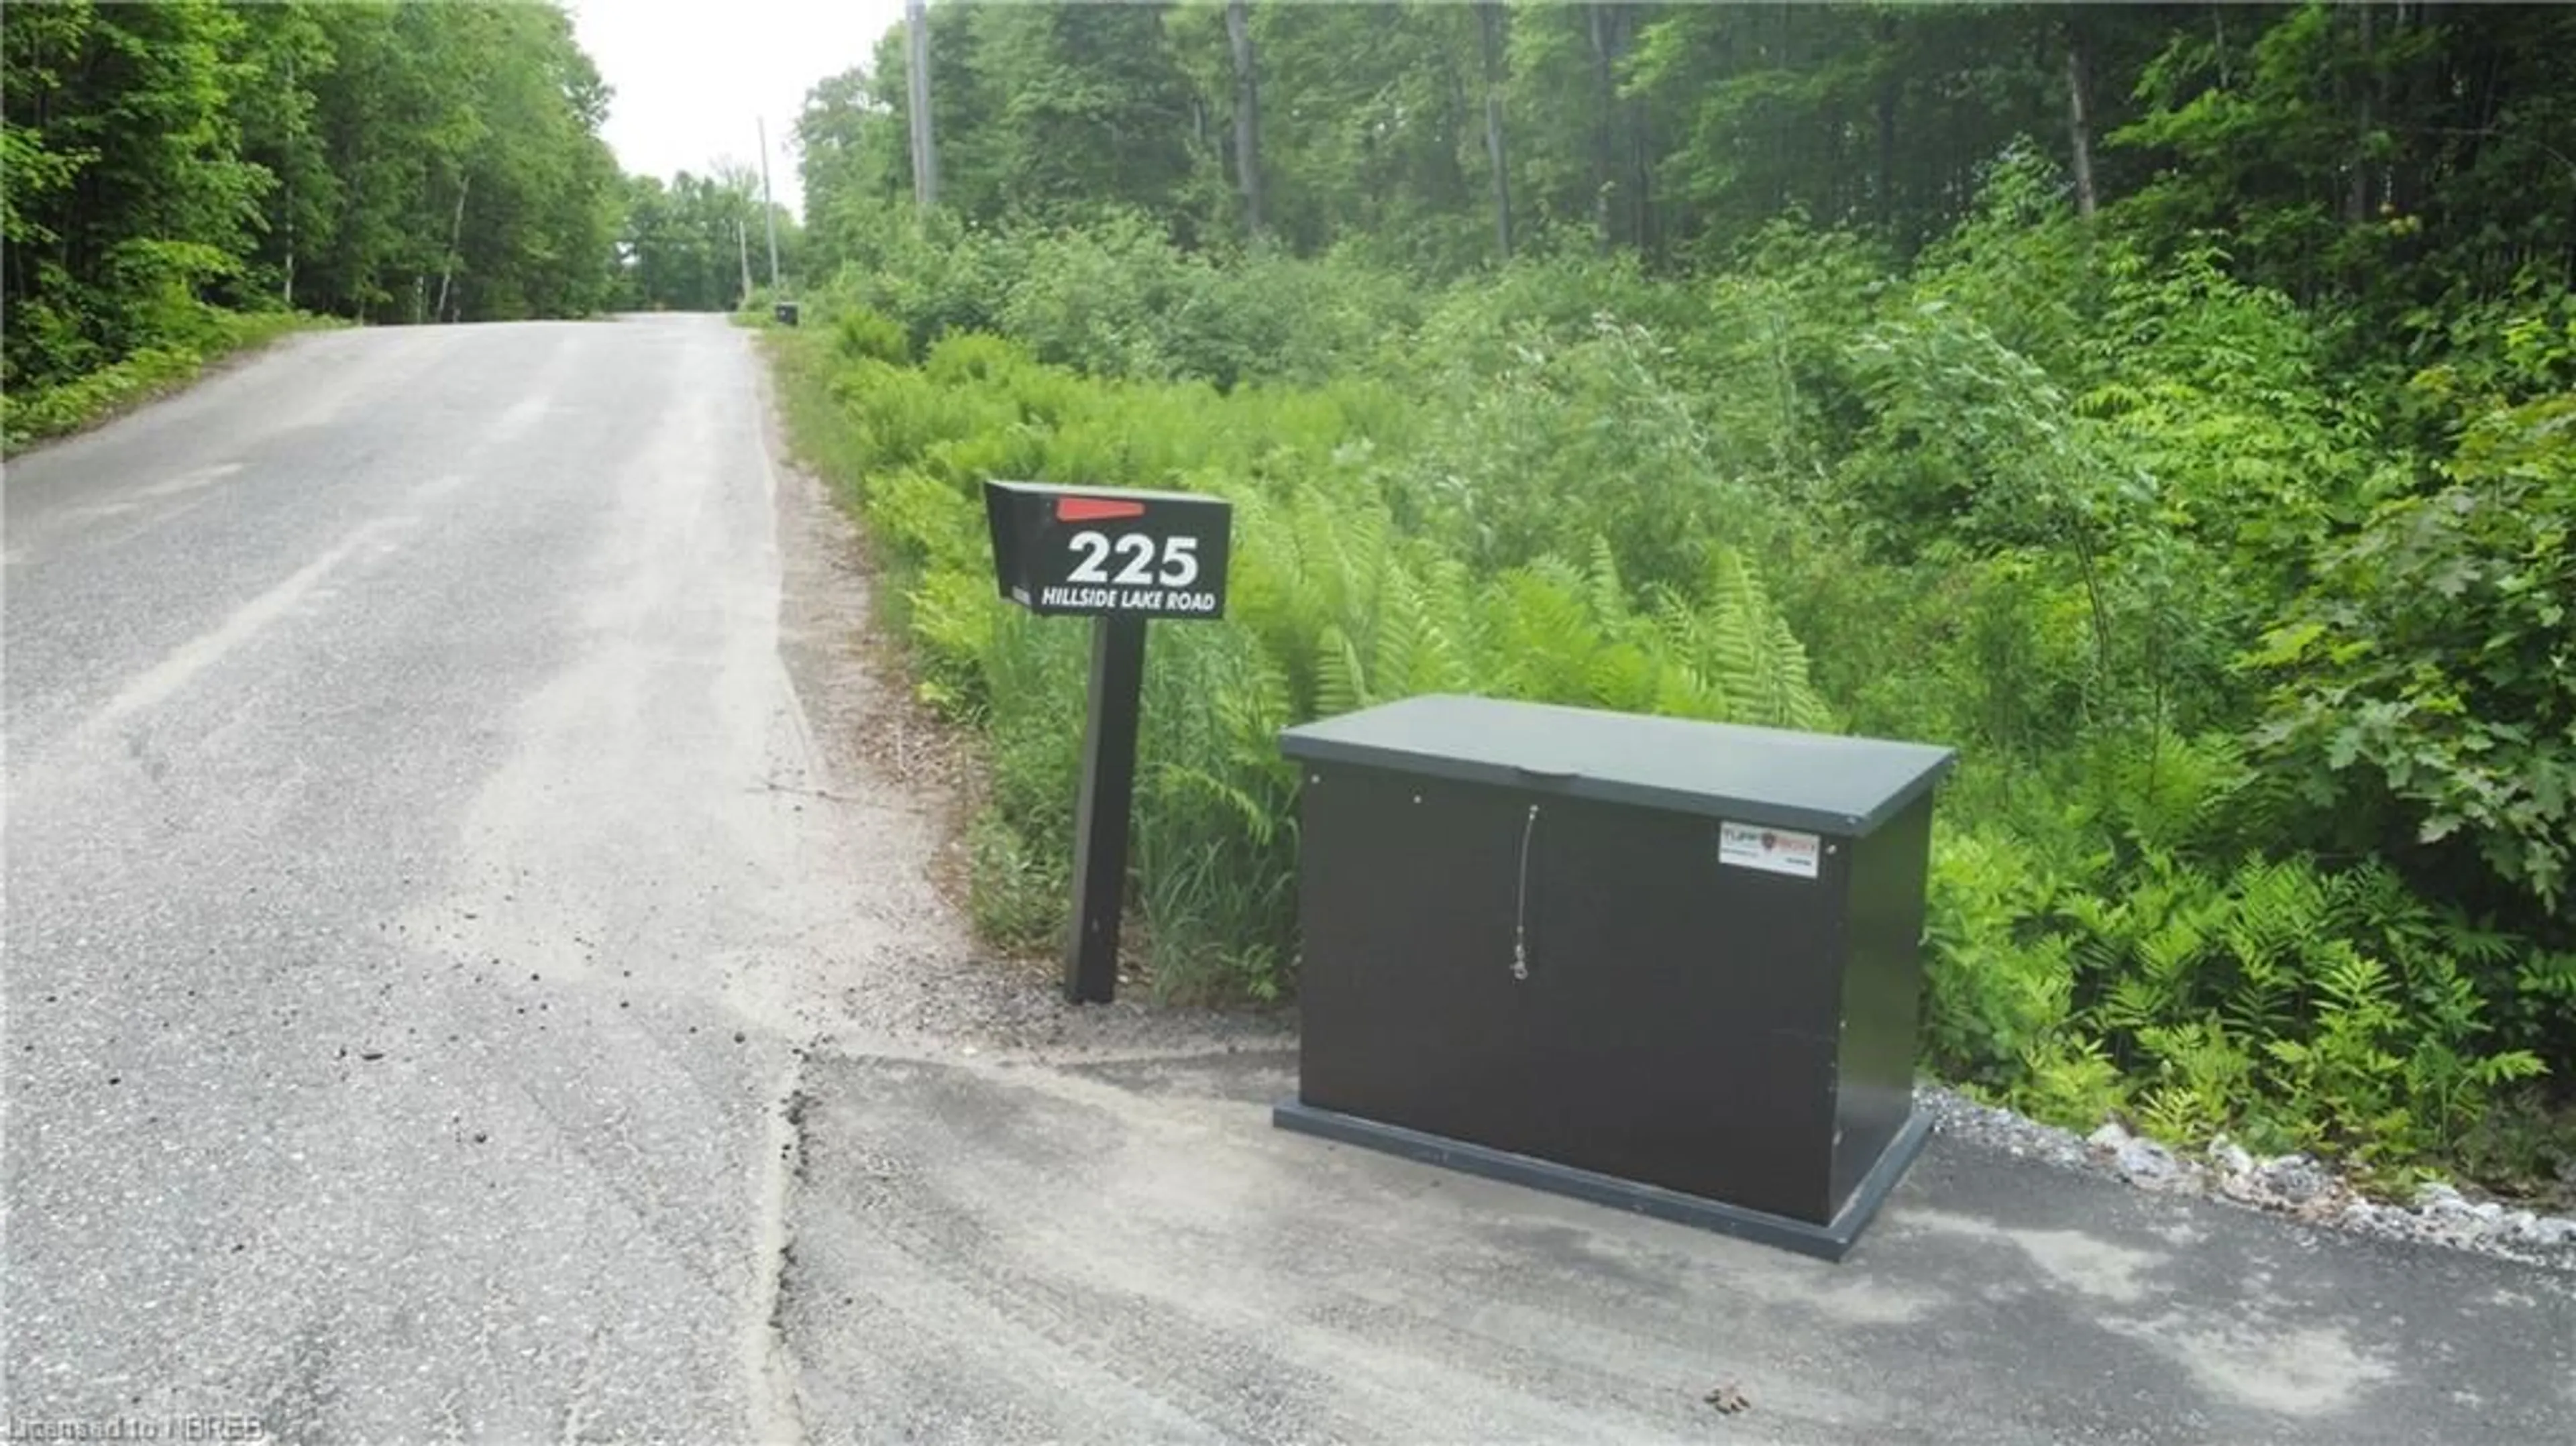 Street view for 225 Hillside Rd, North Bay Ontario P1B 8G2